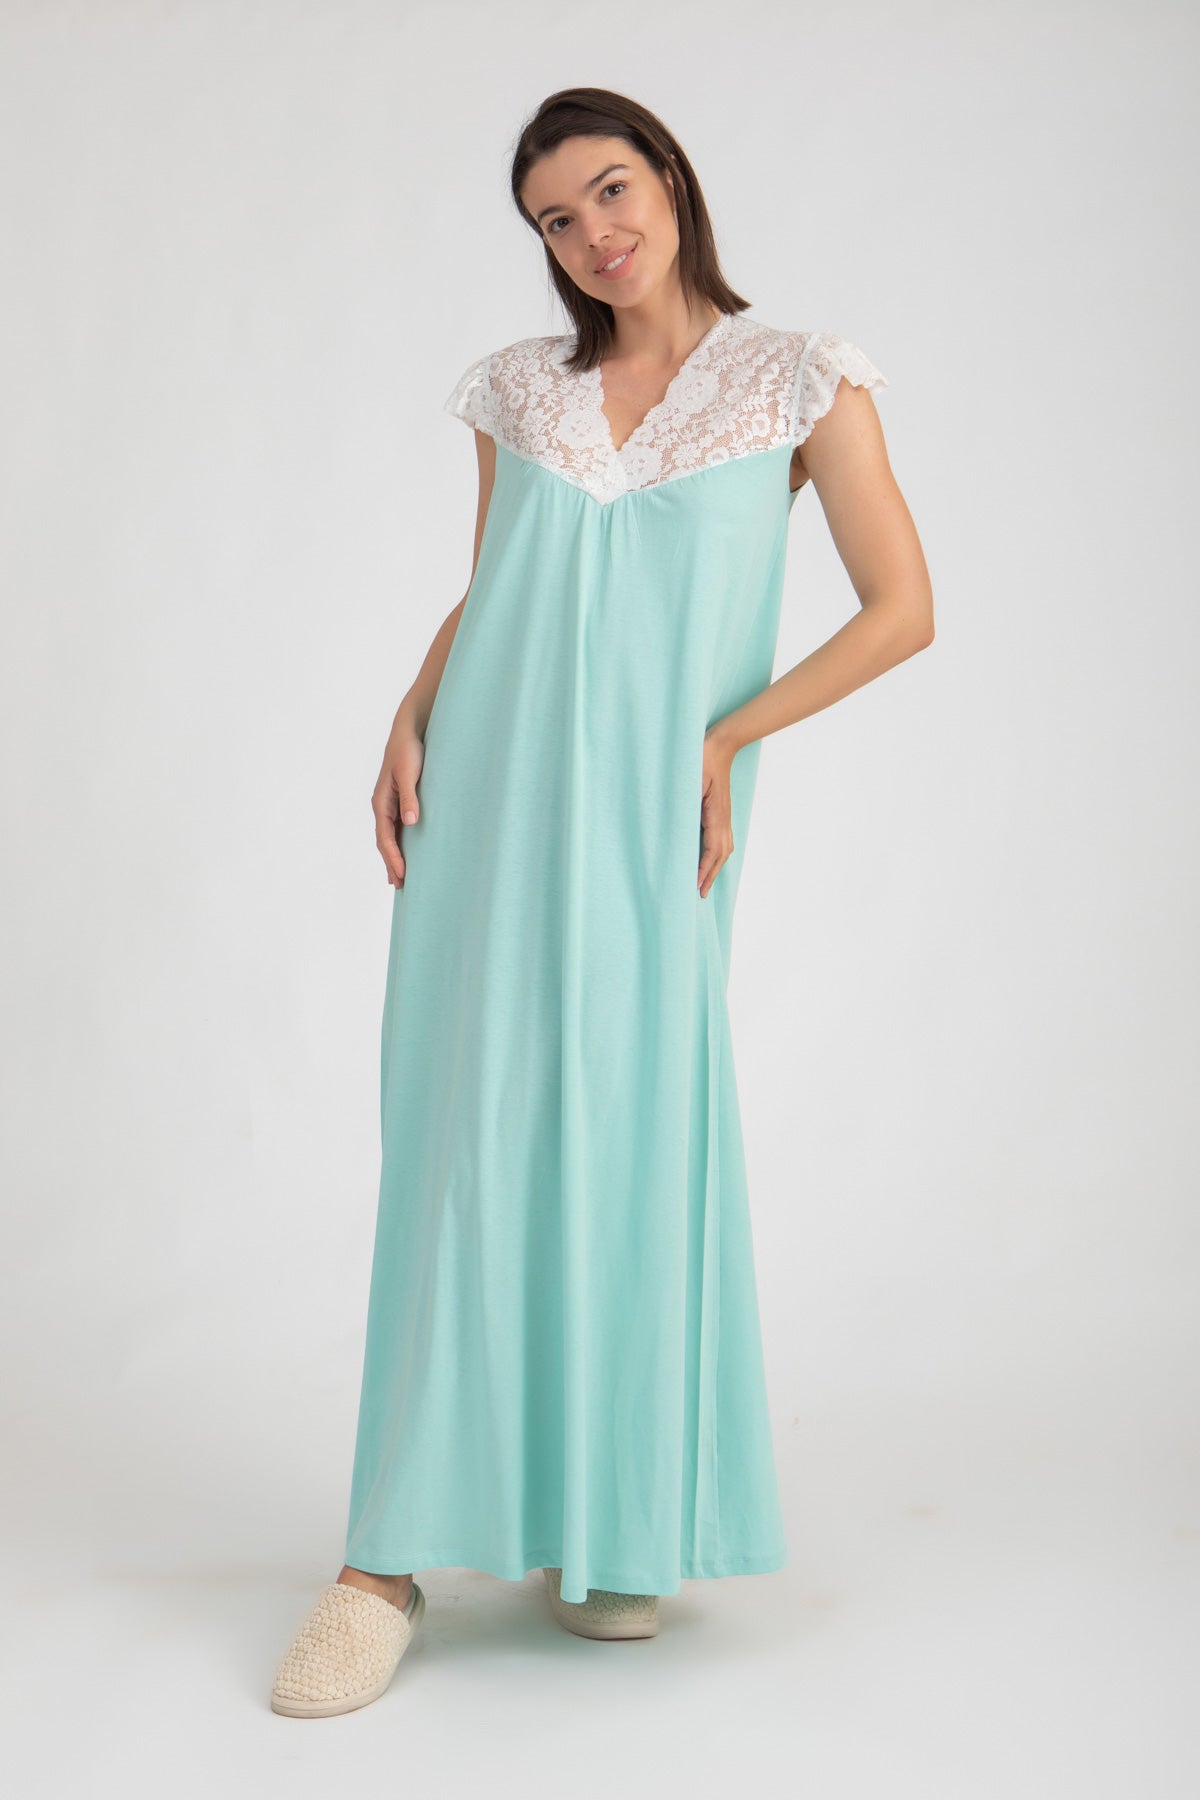 Pretty Nightdress with lace Sleeve & Neckline